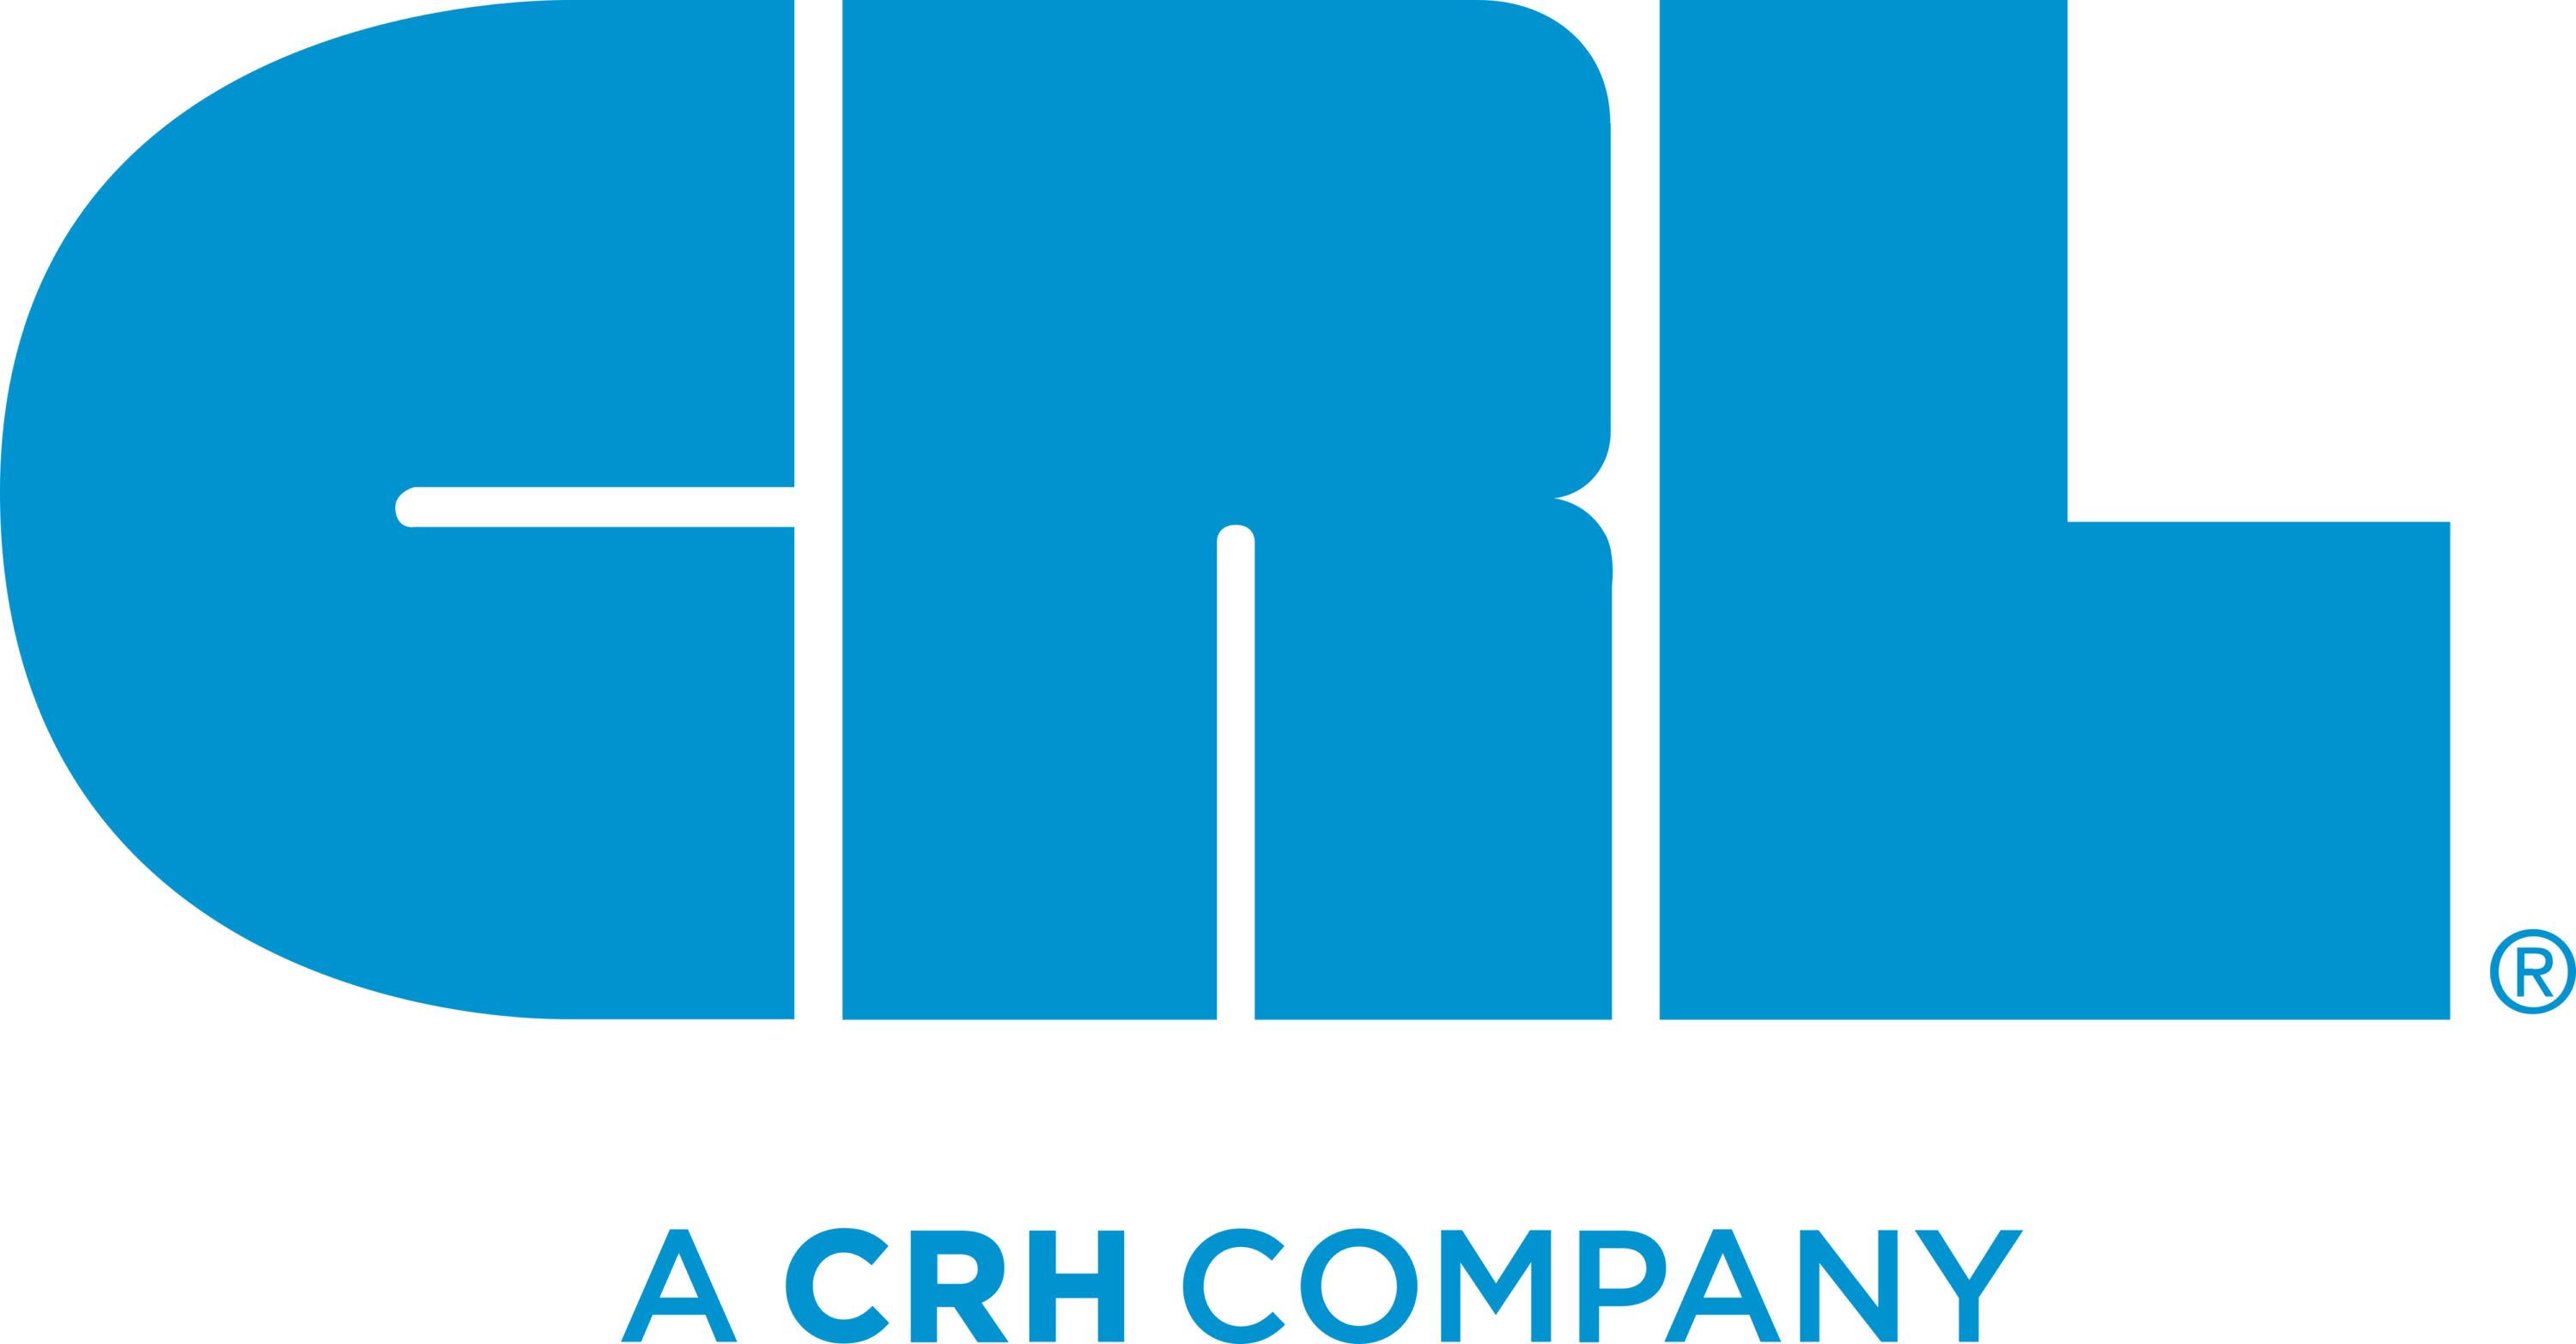 C.R. Laurence Co Logo